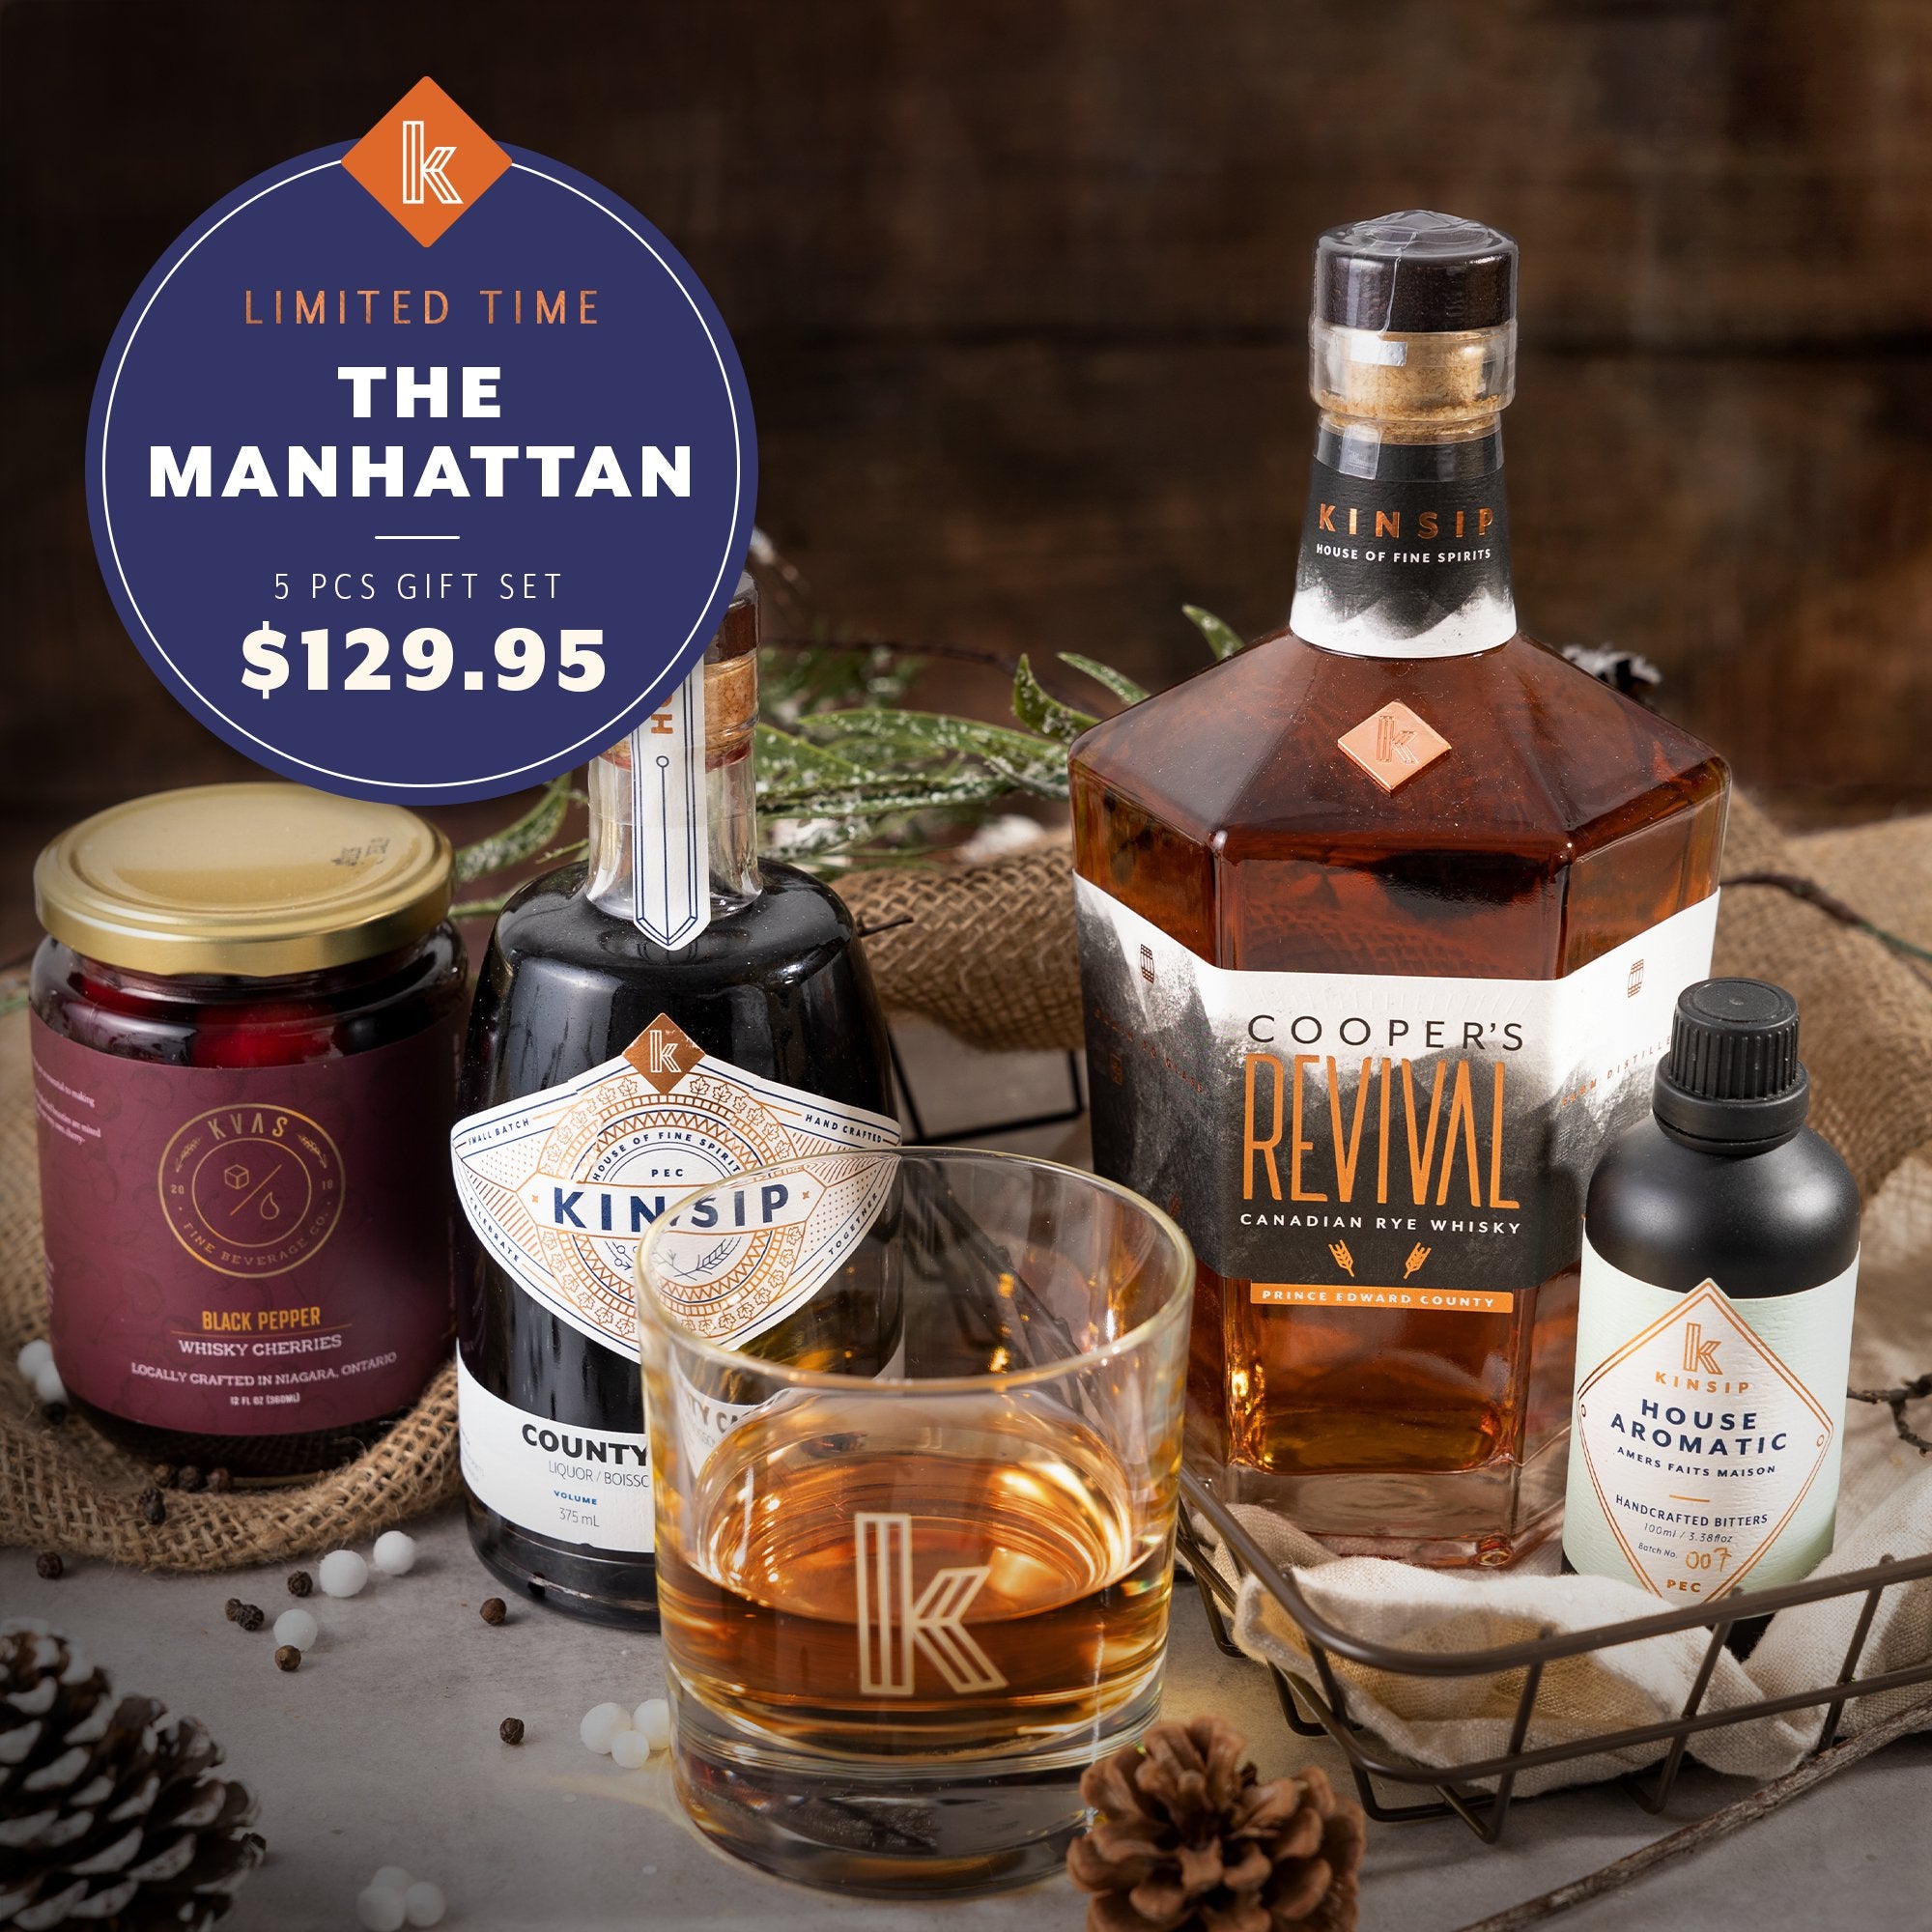 "The Manhattan" Gift Set